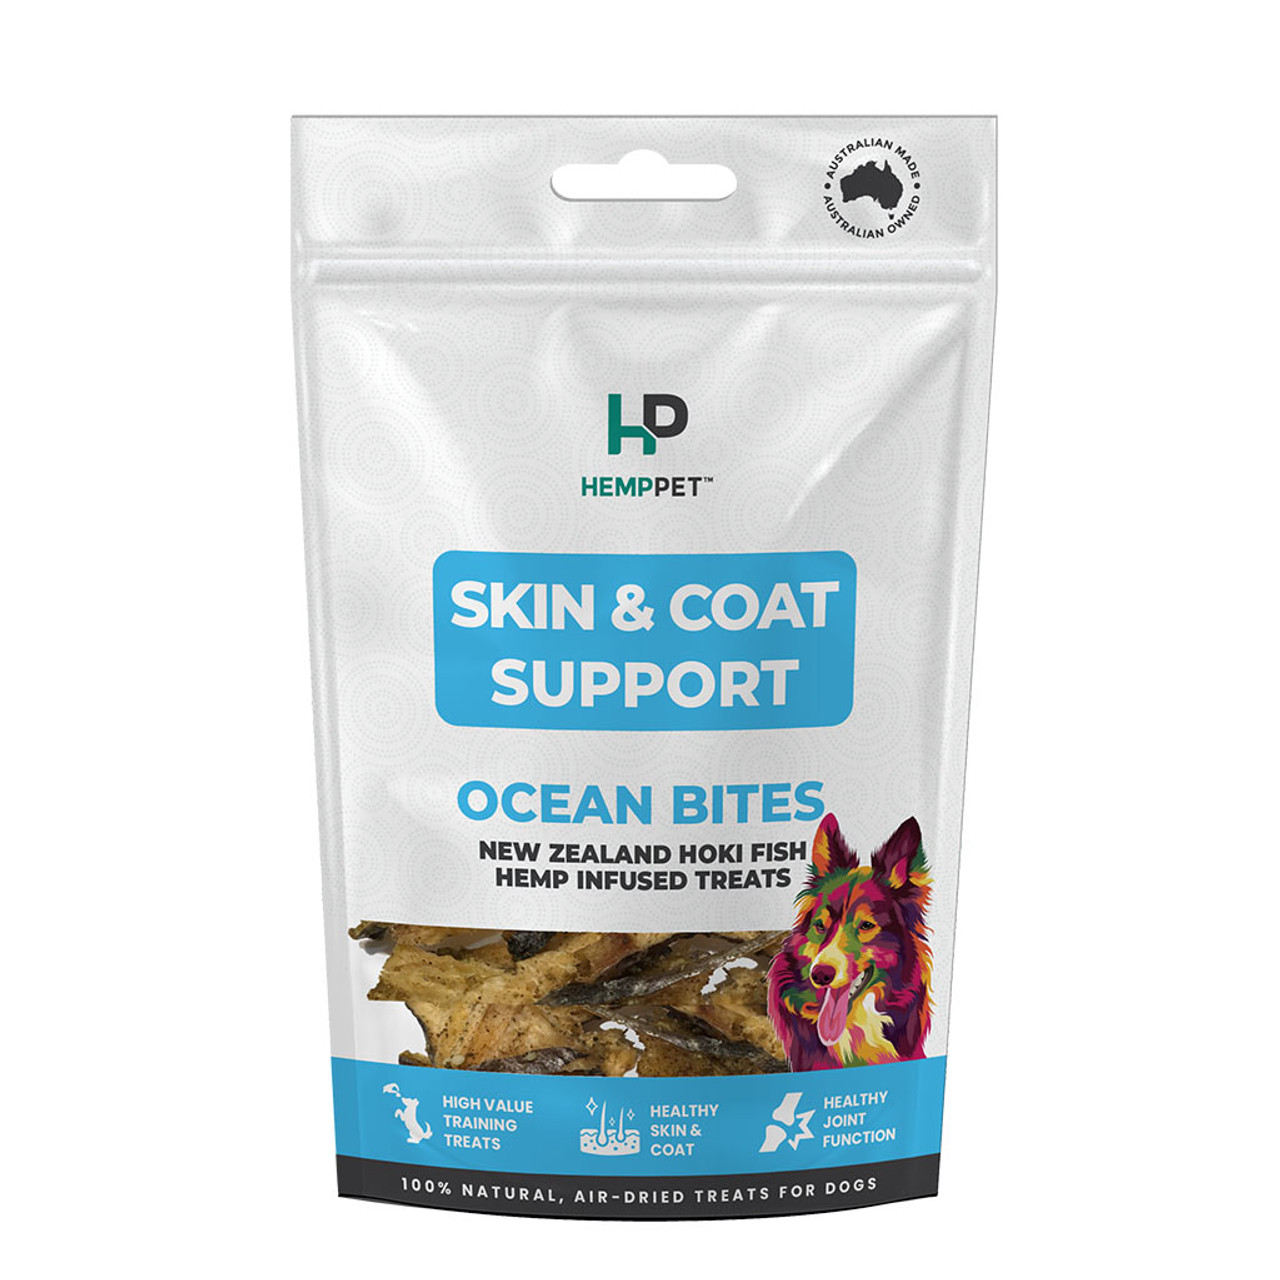 HempPet Skin & Coat Support Hoki Fish Hemp Infused Treats For Dogs 70g (2.46 oz)